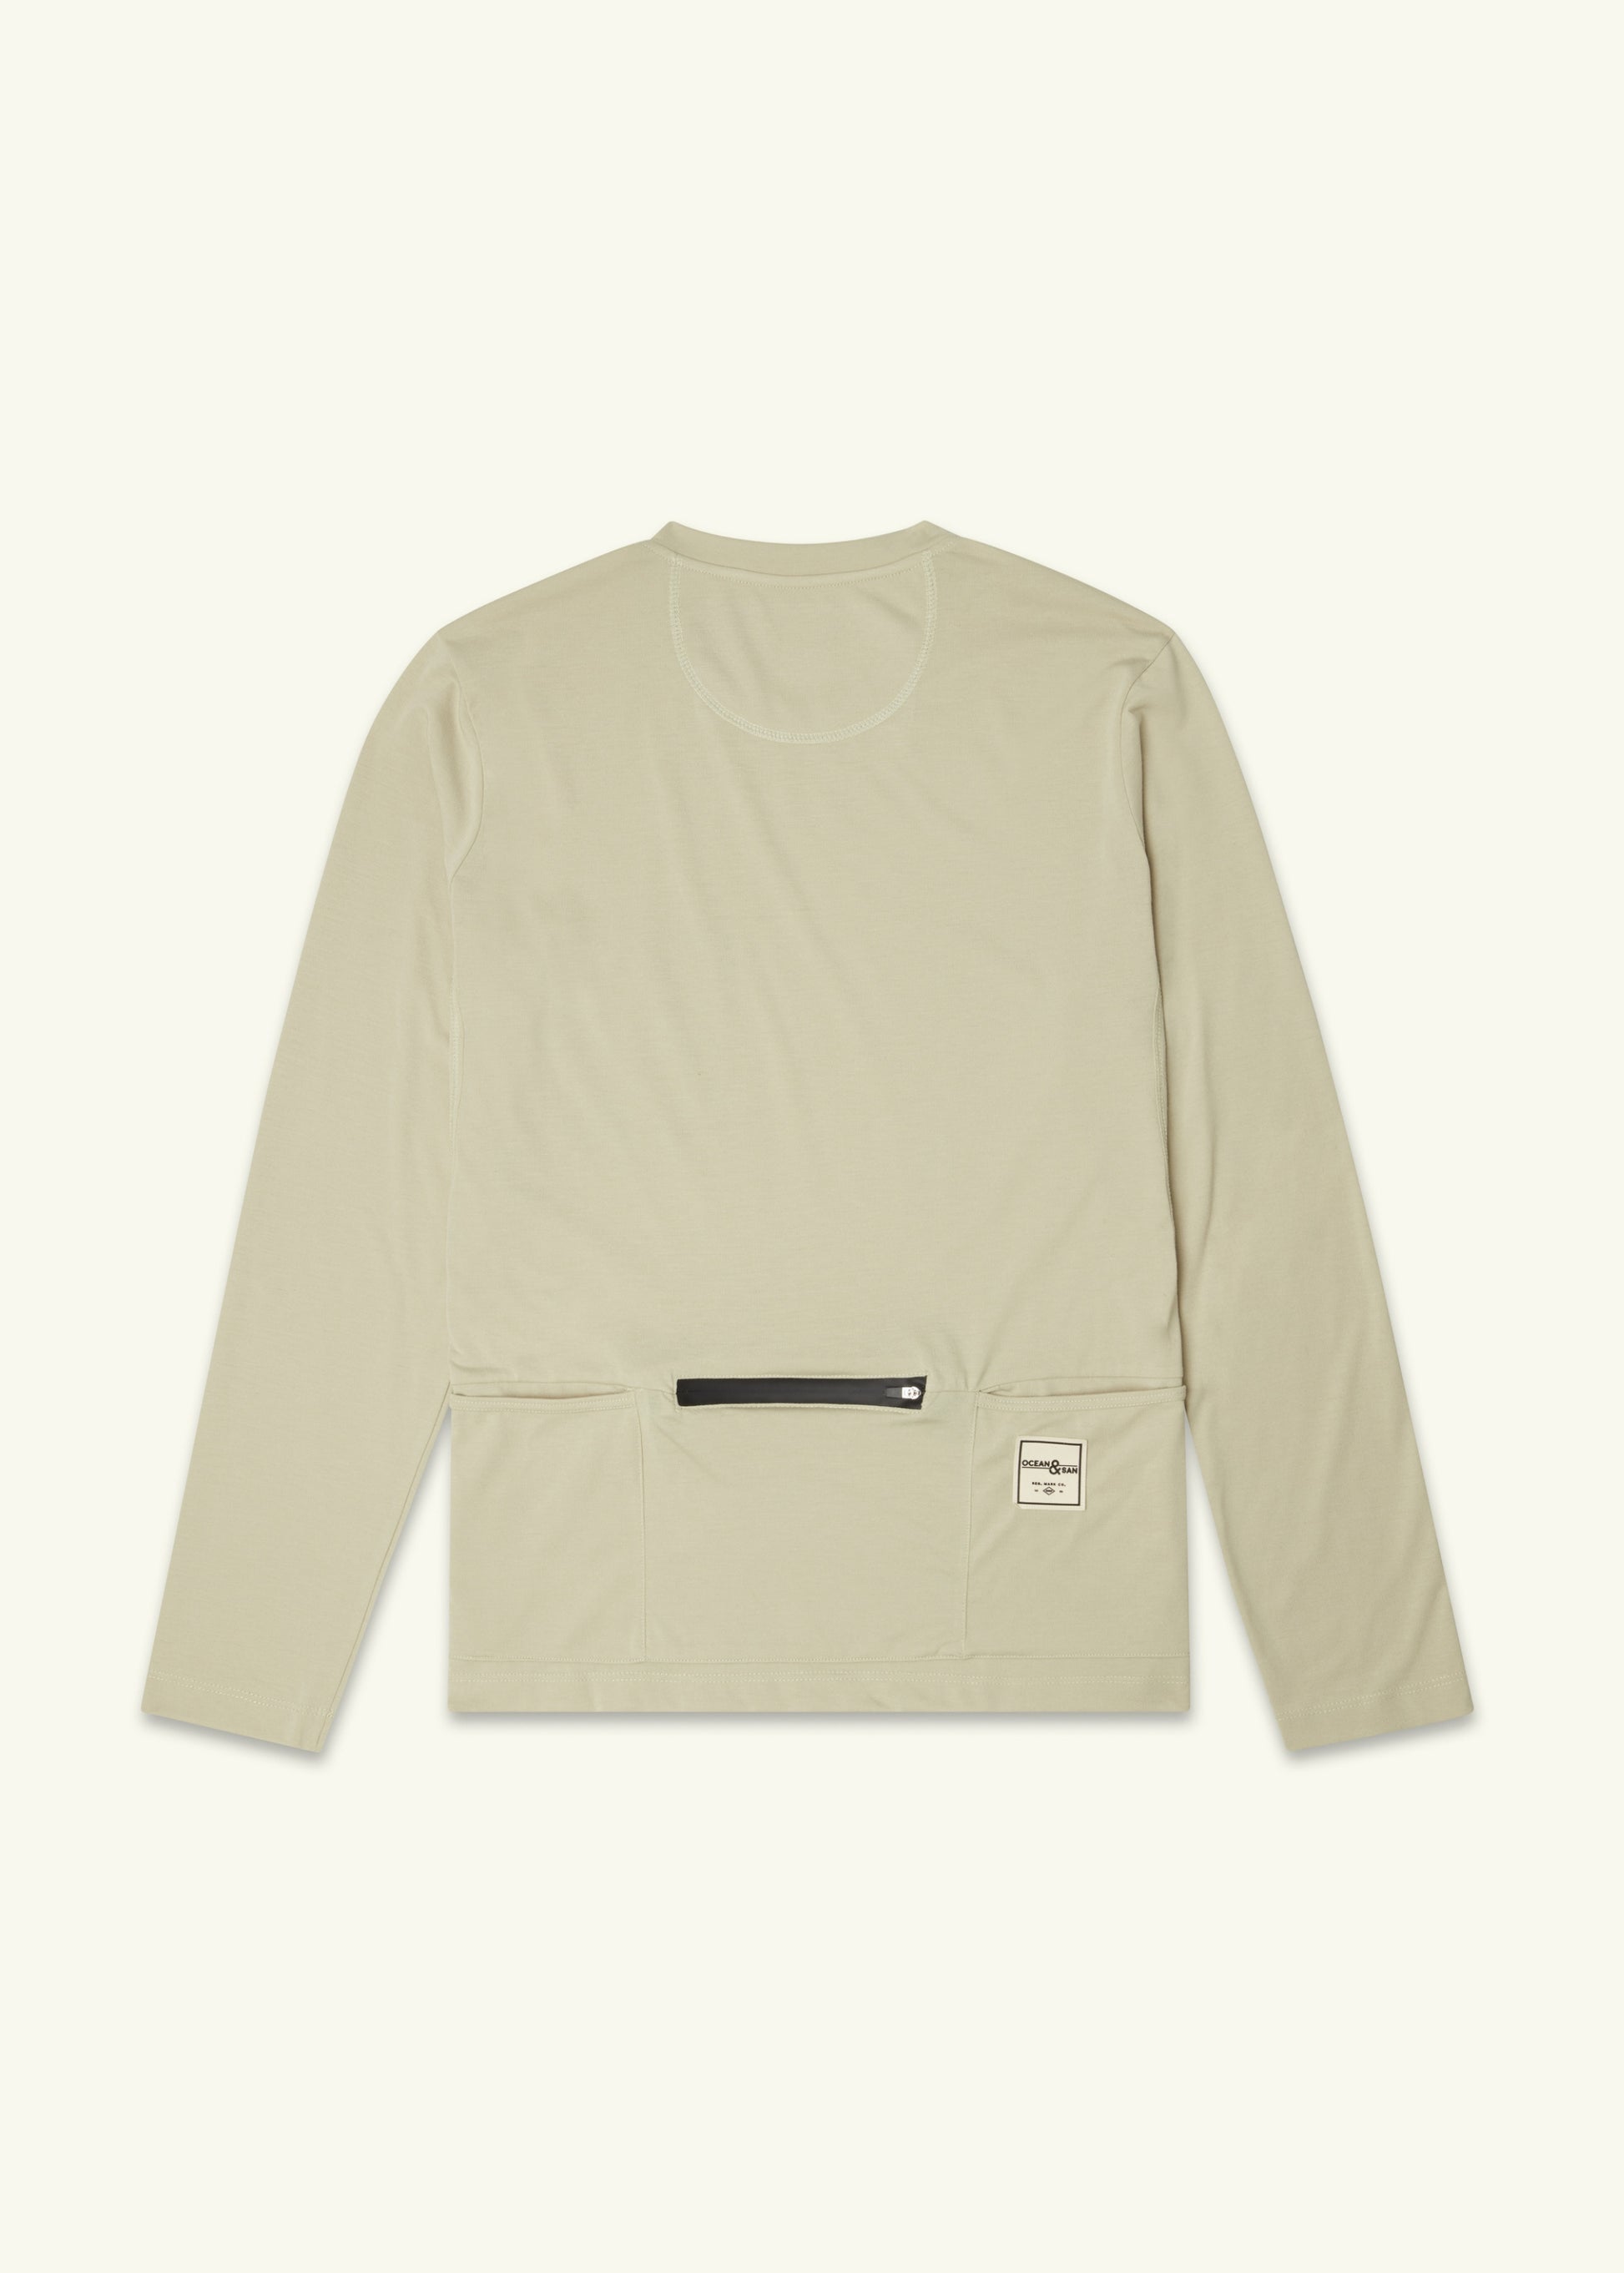 long sleeve eucalyptus cycling shirt, three pockets long sleeve shirt, shirt with pockets